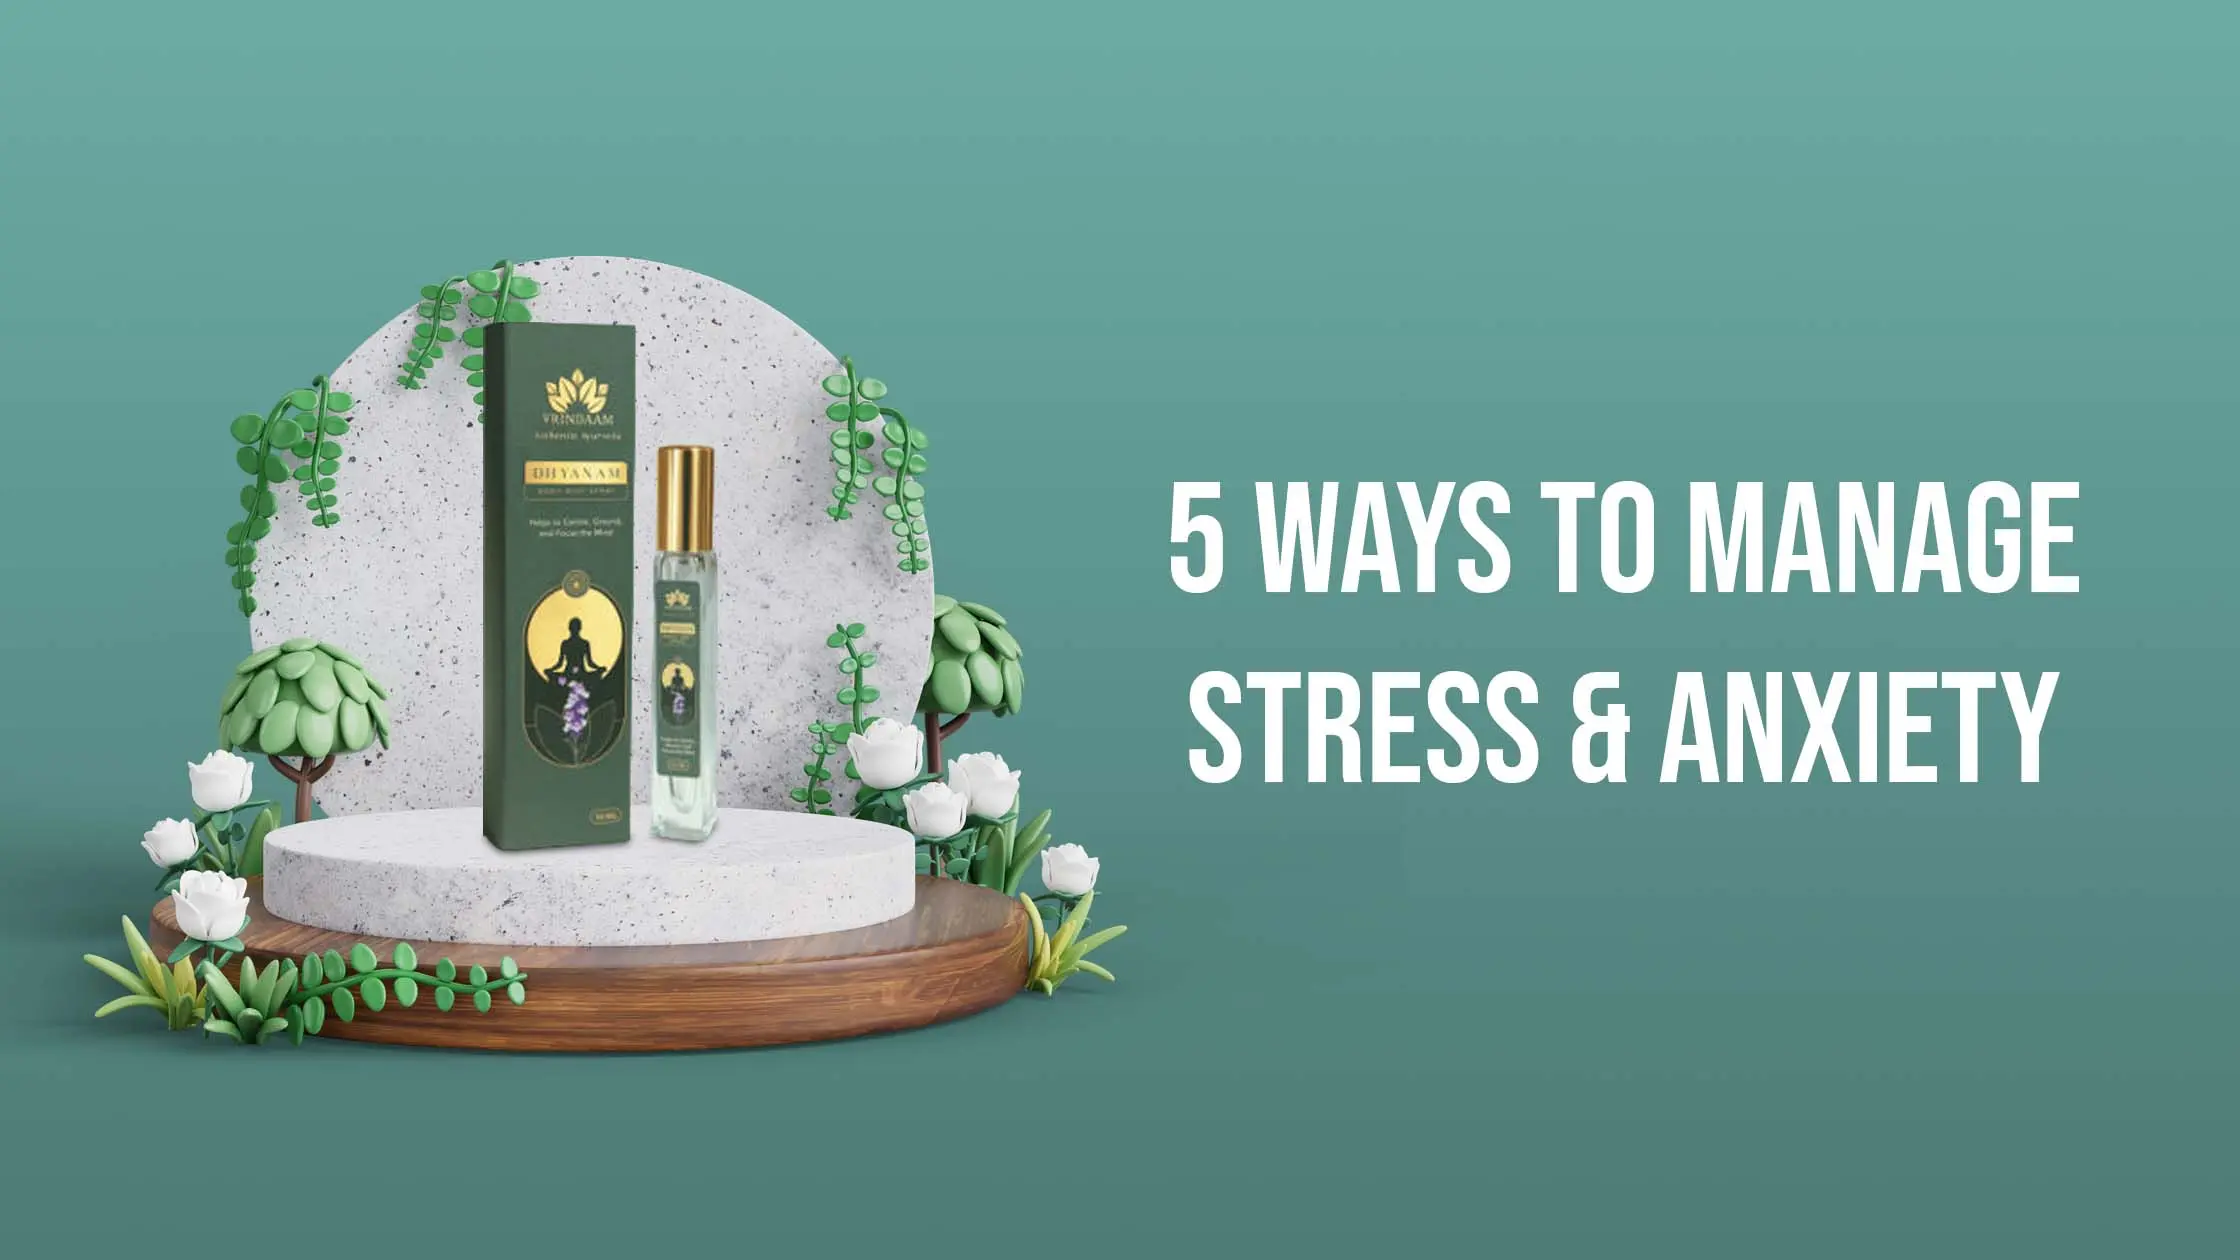 5 ways to manage stress & anxiety